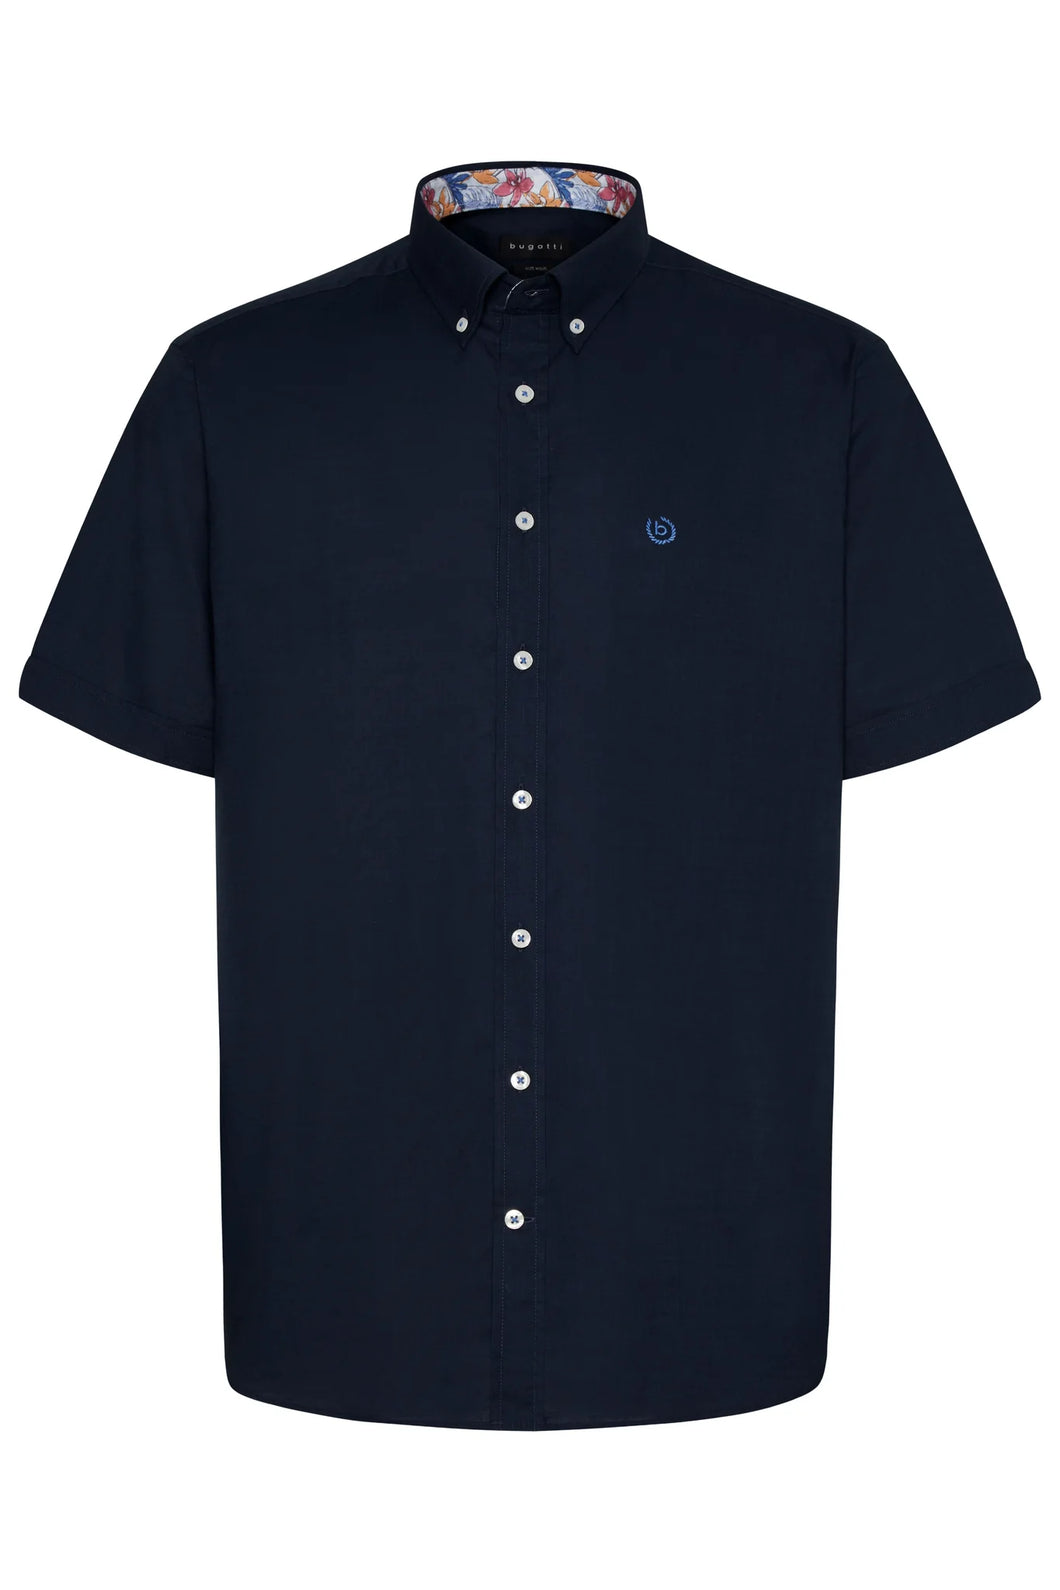 Bugatti - Short Sleeve Shirt - Navy Blue